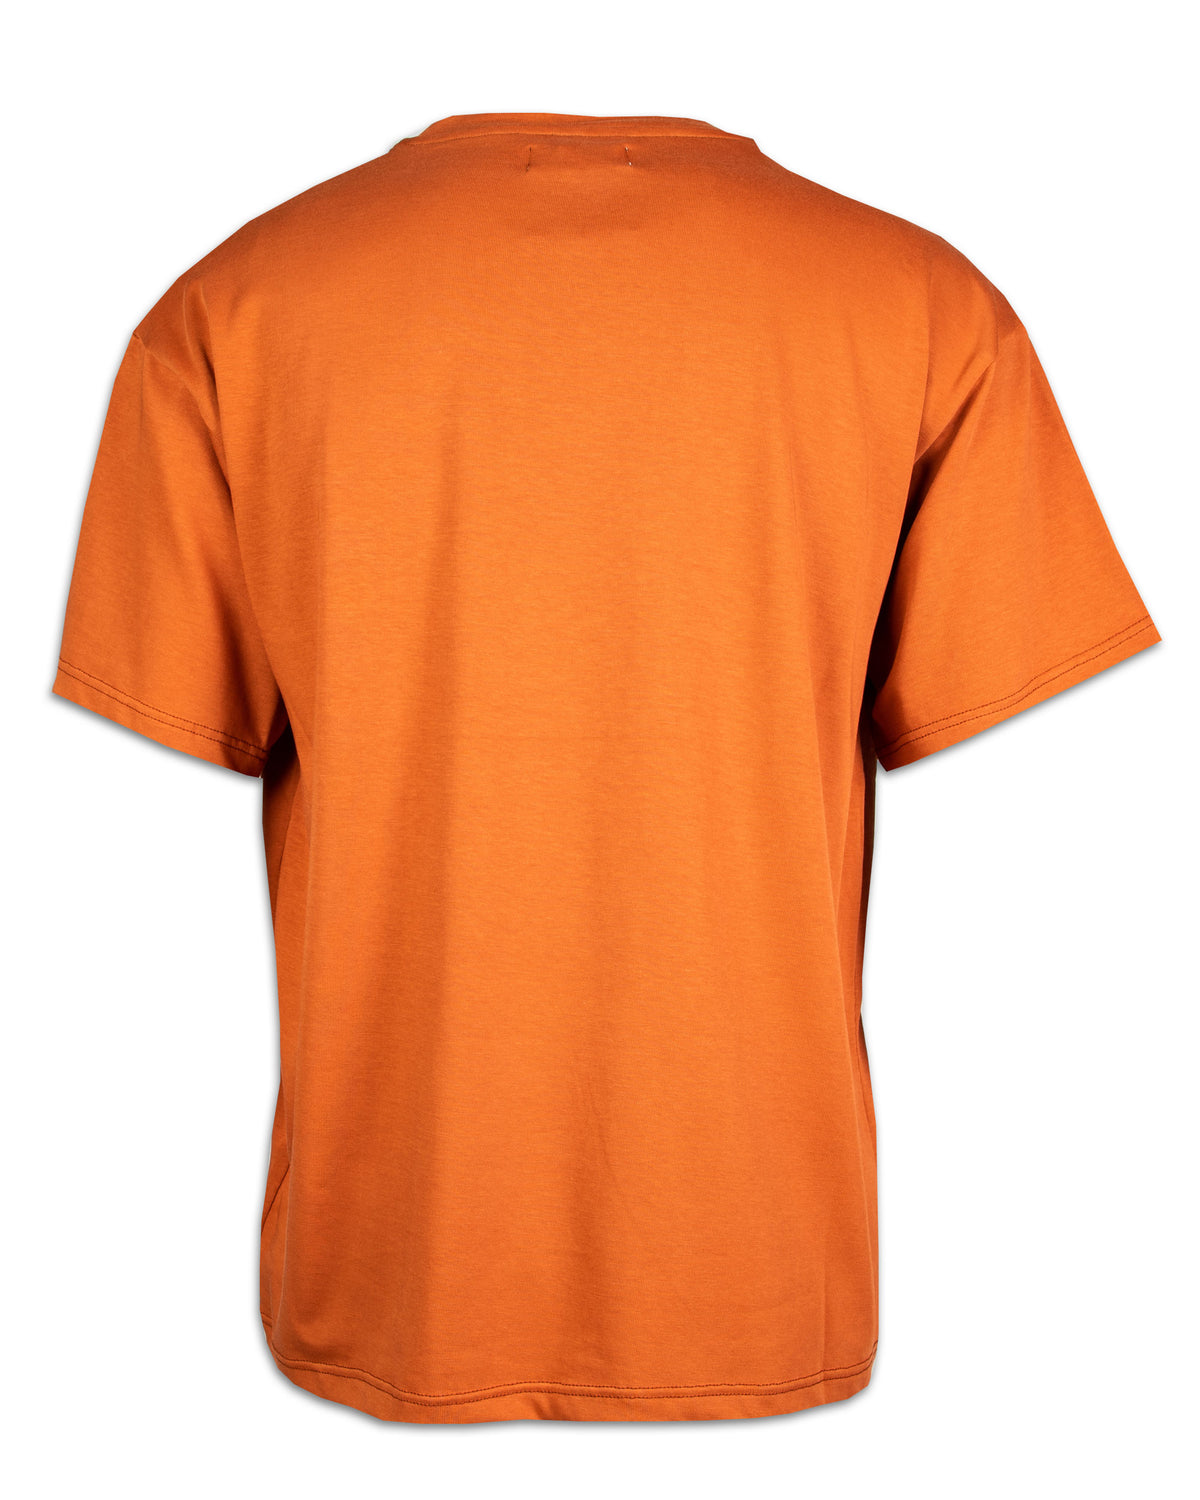 T-Shirt Uomo Cat wwr Muscles T-shirt Orange